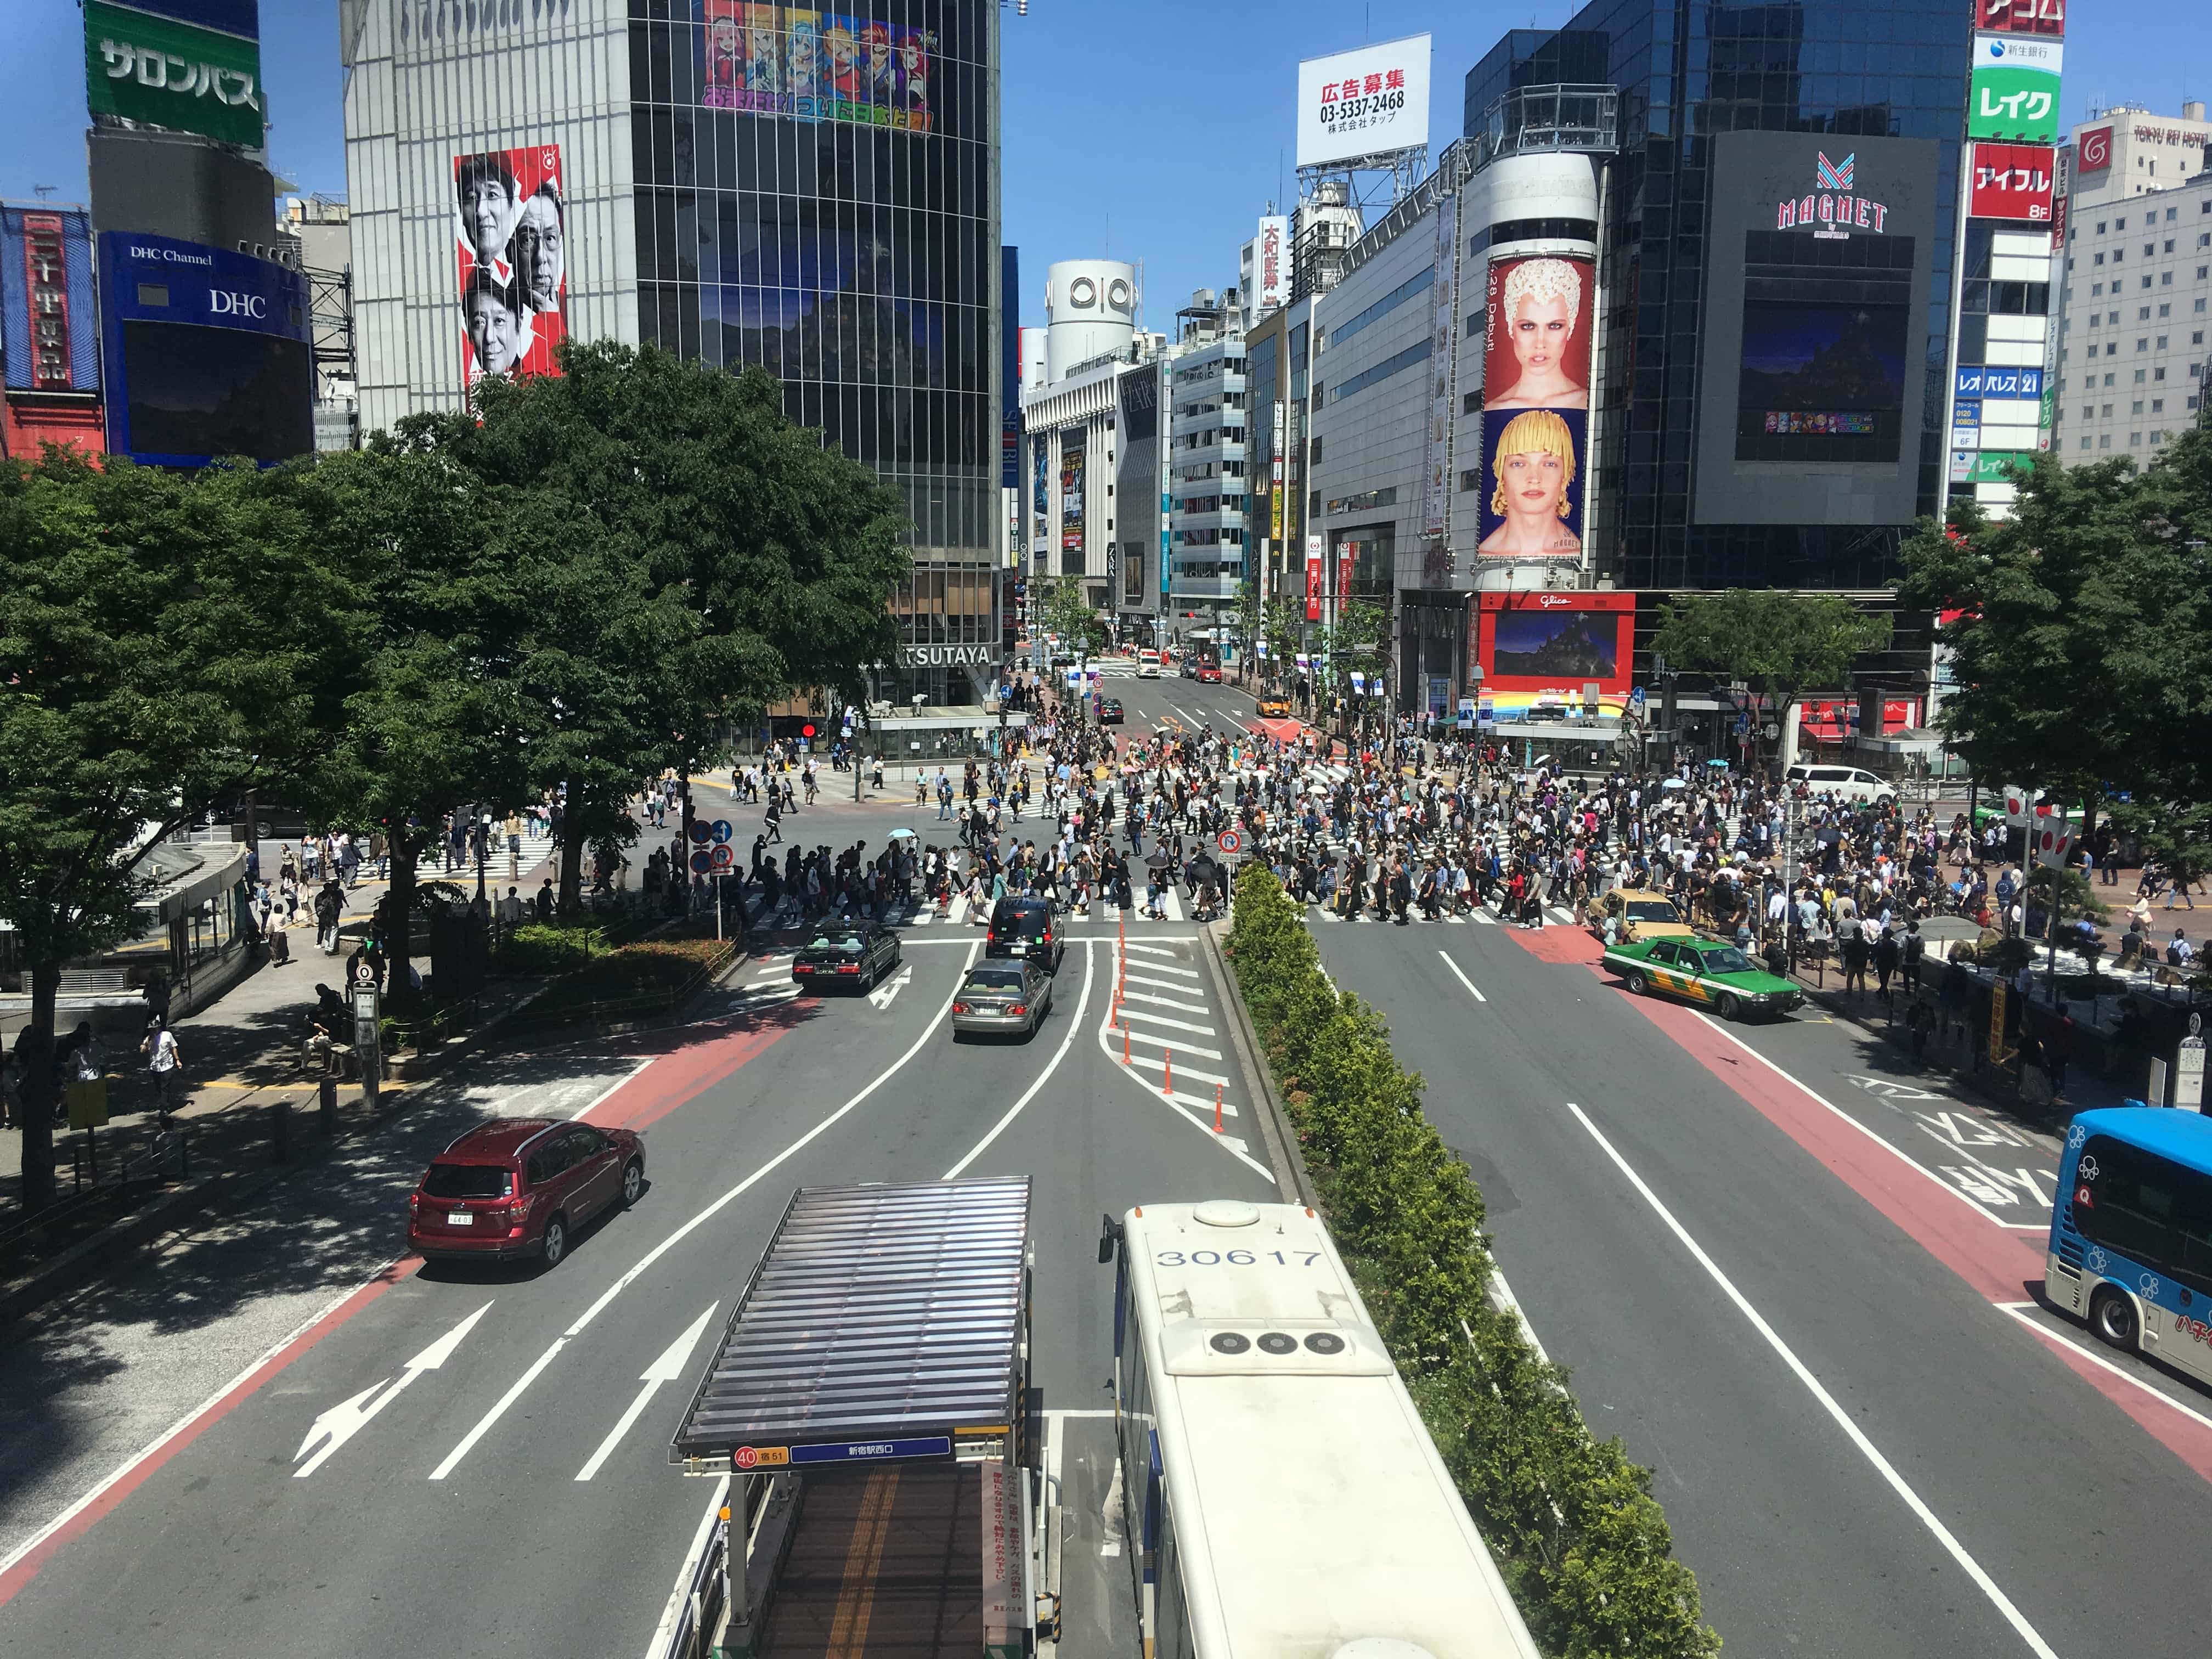 shibuya crossing japan tokyo asia cruise